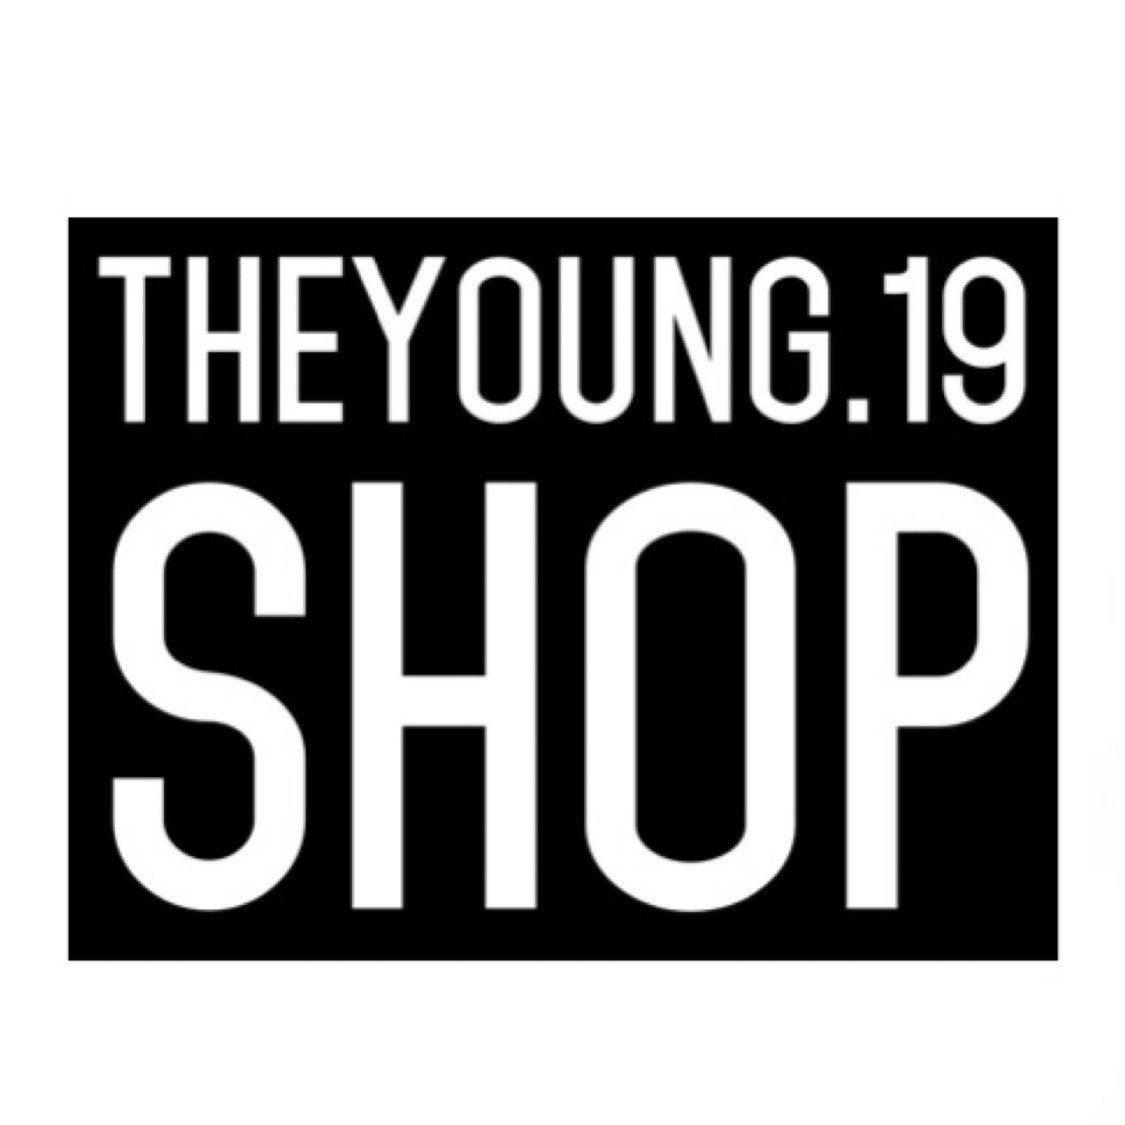 TheYoung.19 Shop, Cửa hàng trực tuyến | WebRaoVat - webraovat.net.vn